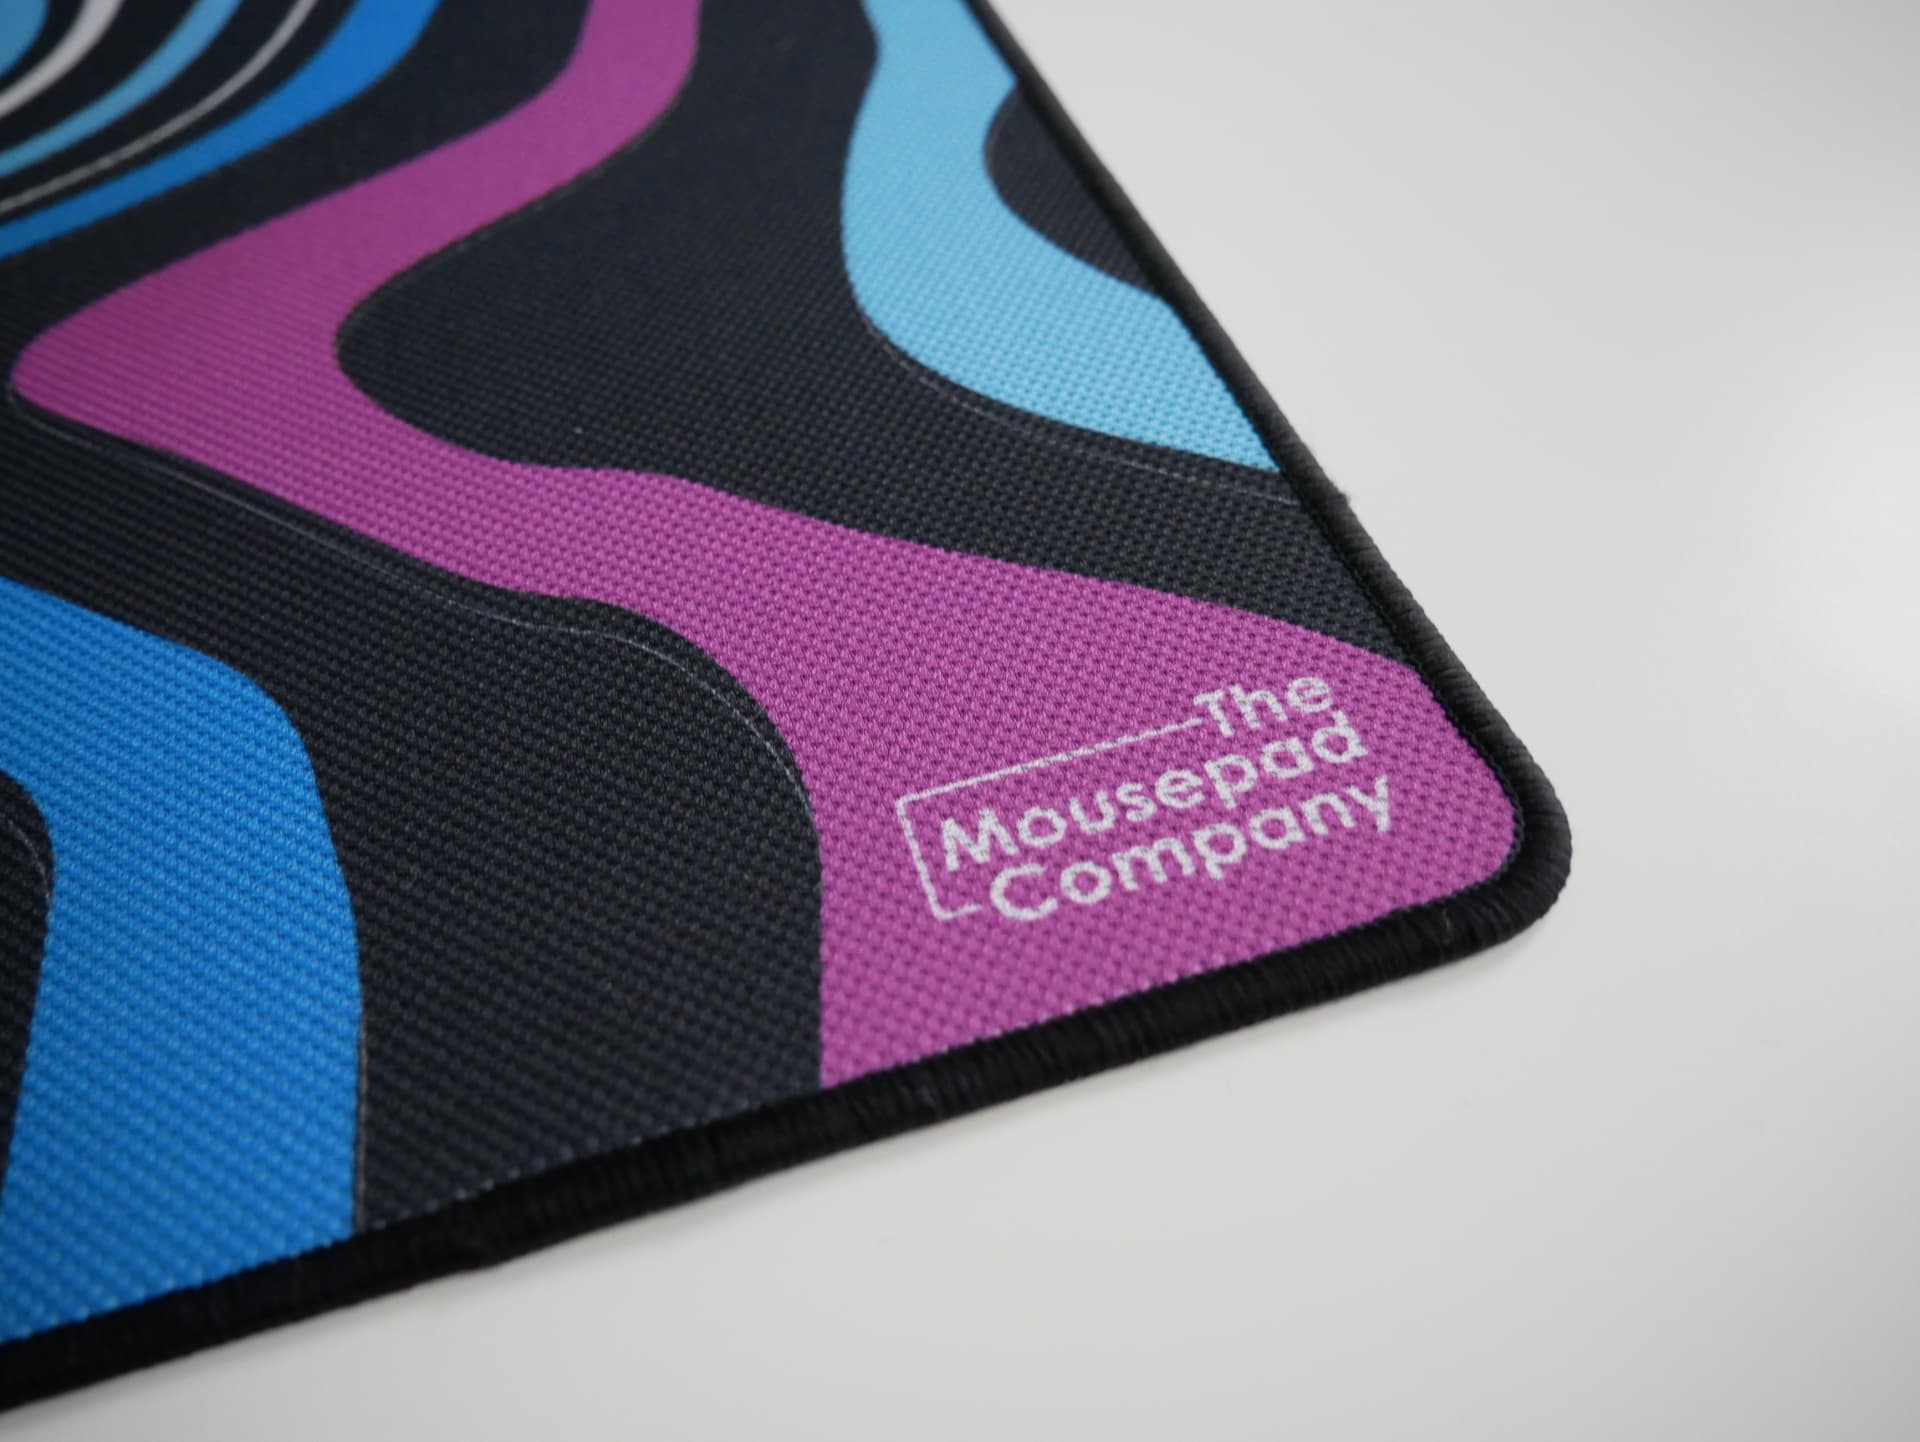 「The Mousepad Company Strata Bold」レビュー。独特な滑走面と豊富なデザインが魅力のゲーミングマウスパッド